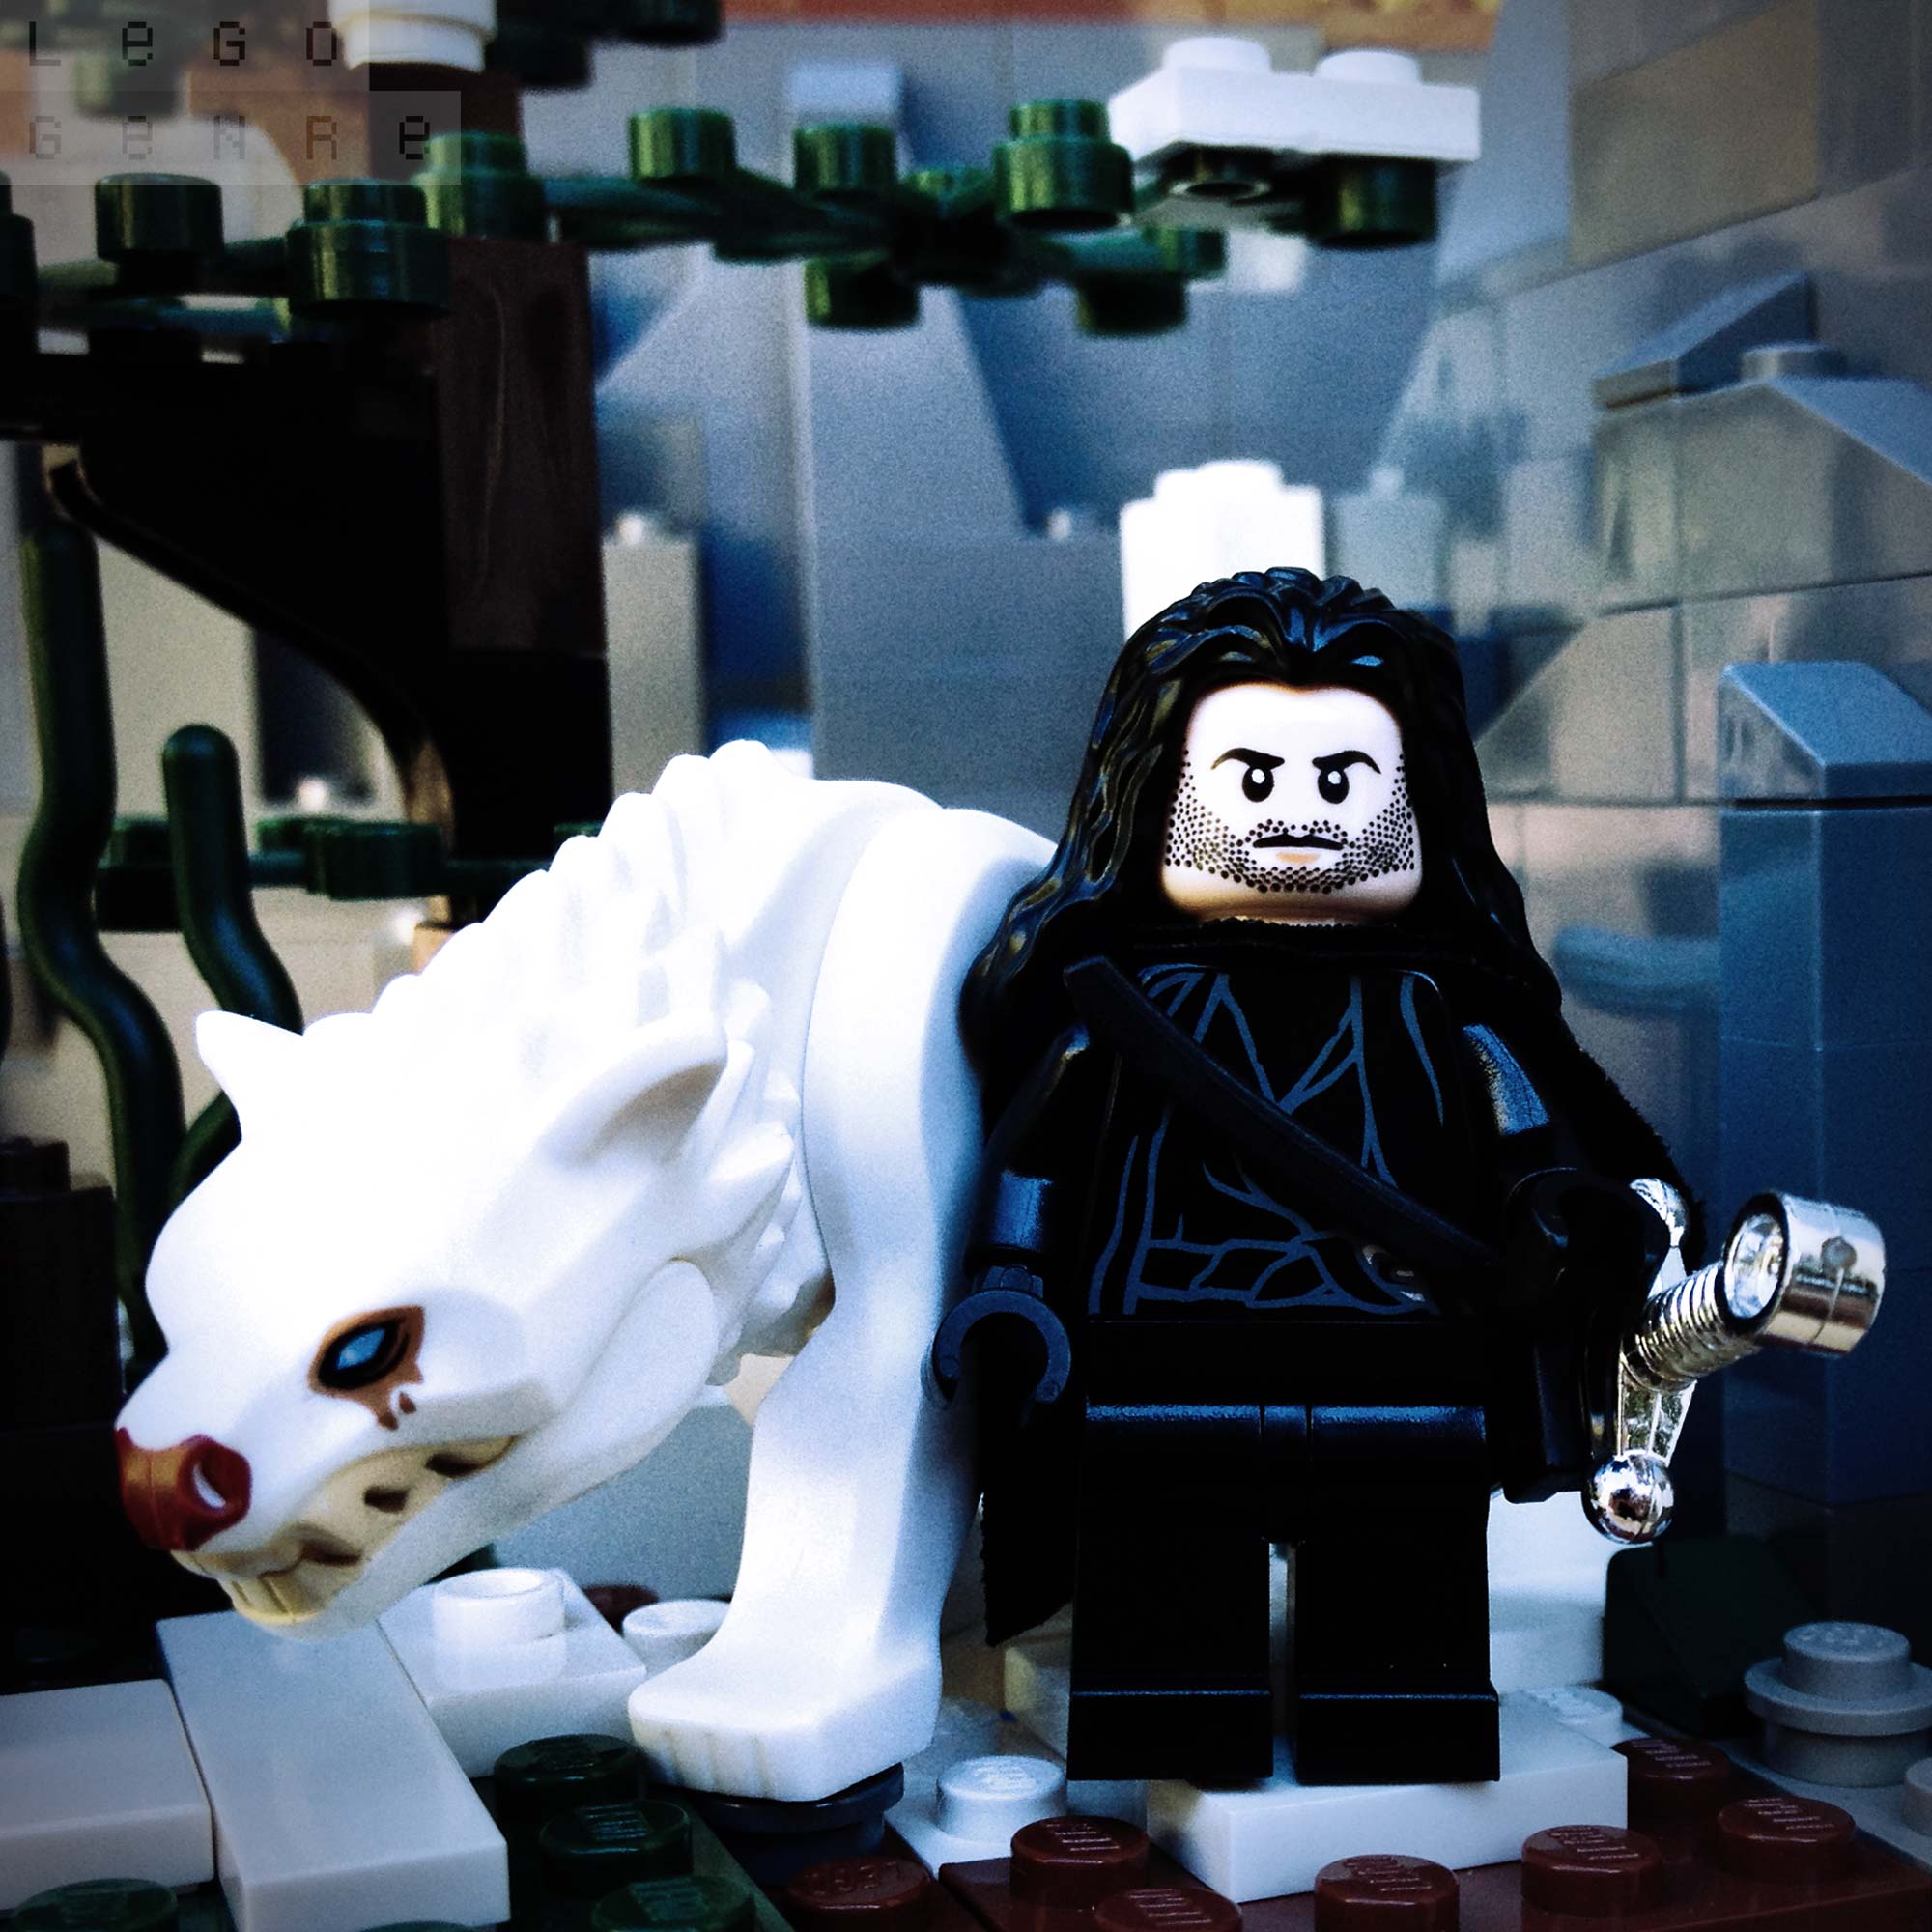 LegoGenre 00301: Jon Snow and Ghost